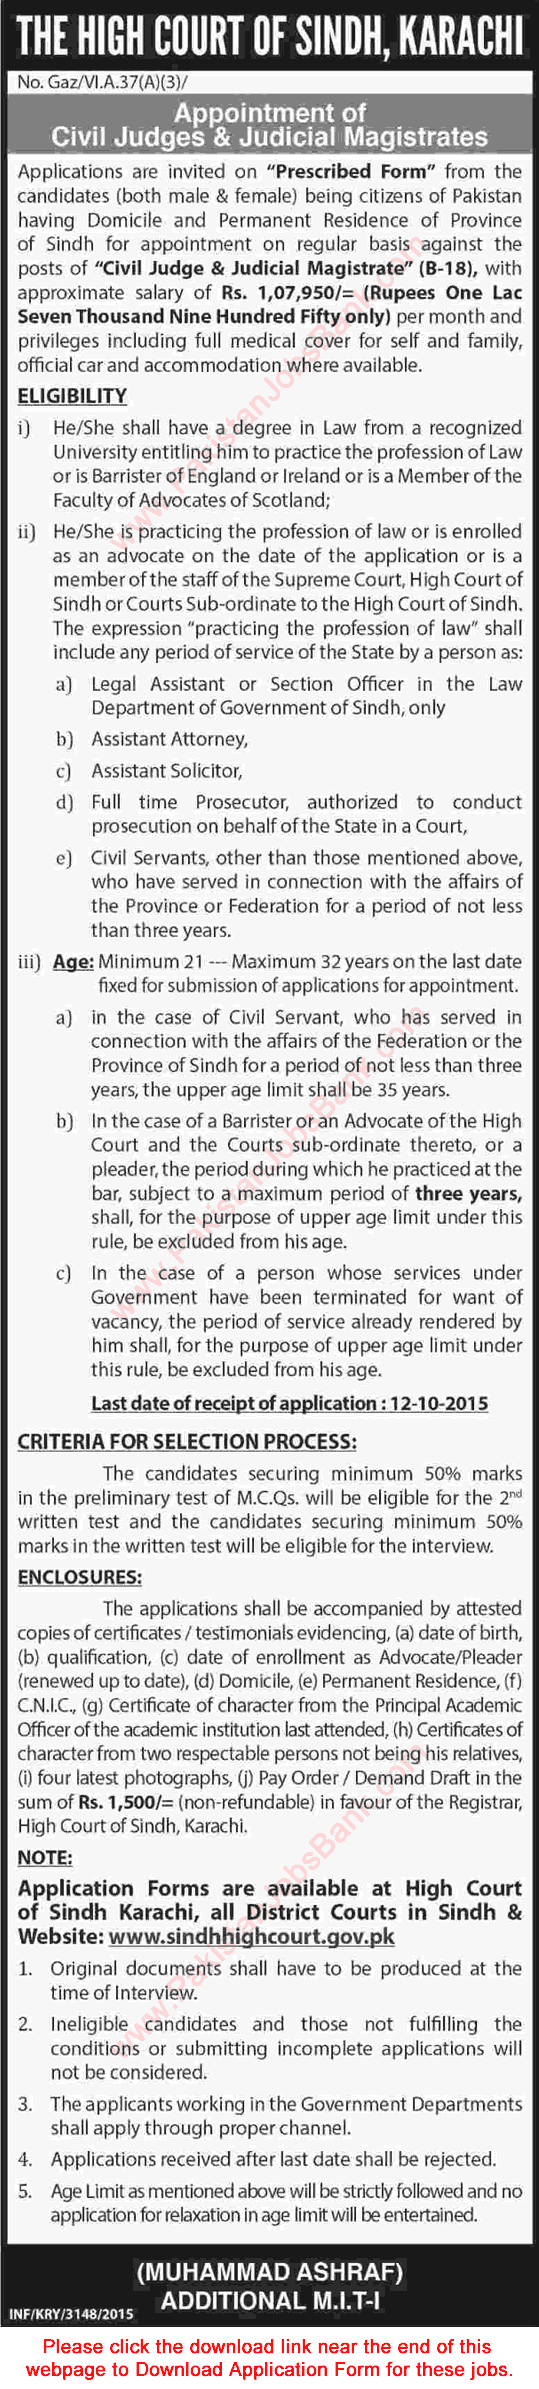 Civil Judges & Judicial Magistrates Jobs in Sindh High Court 2015 September Application Form Download